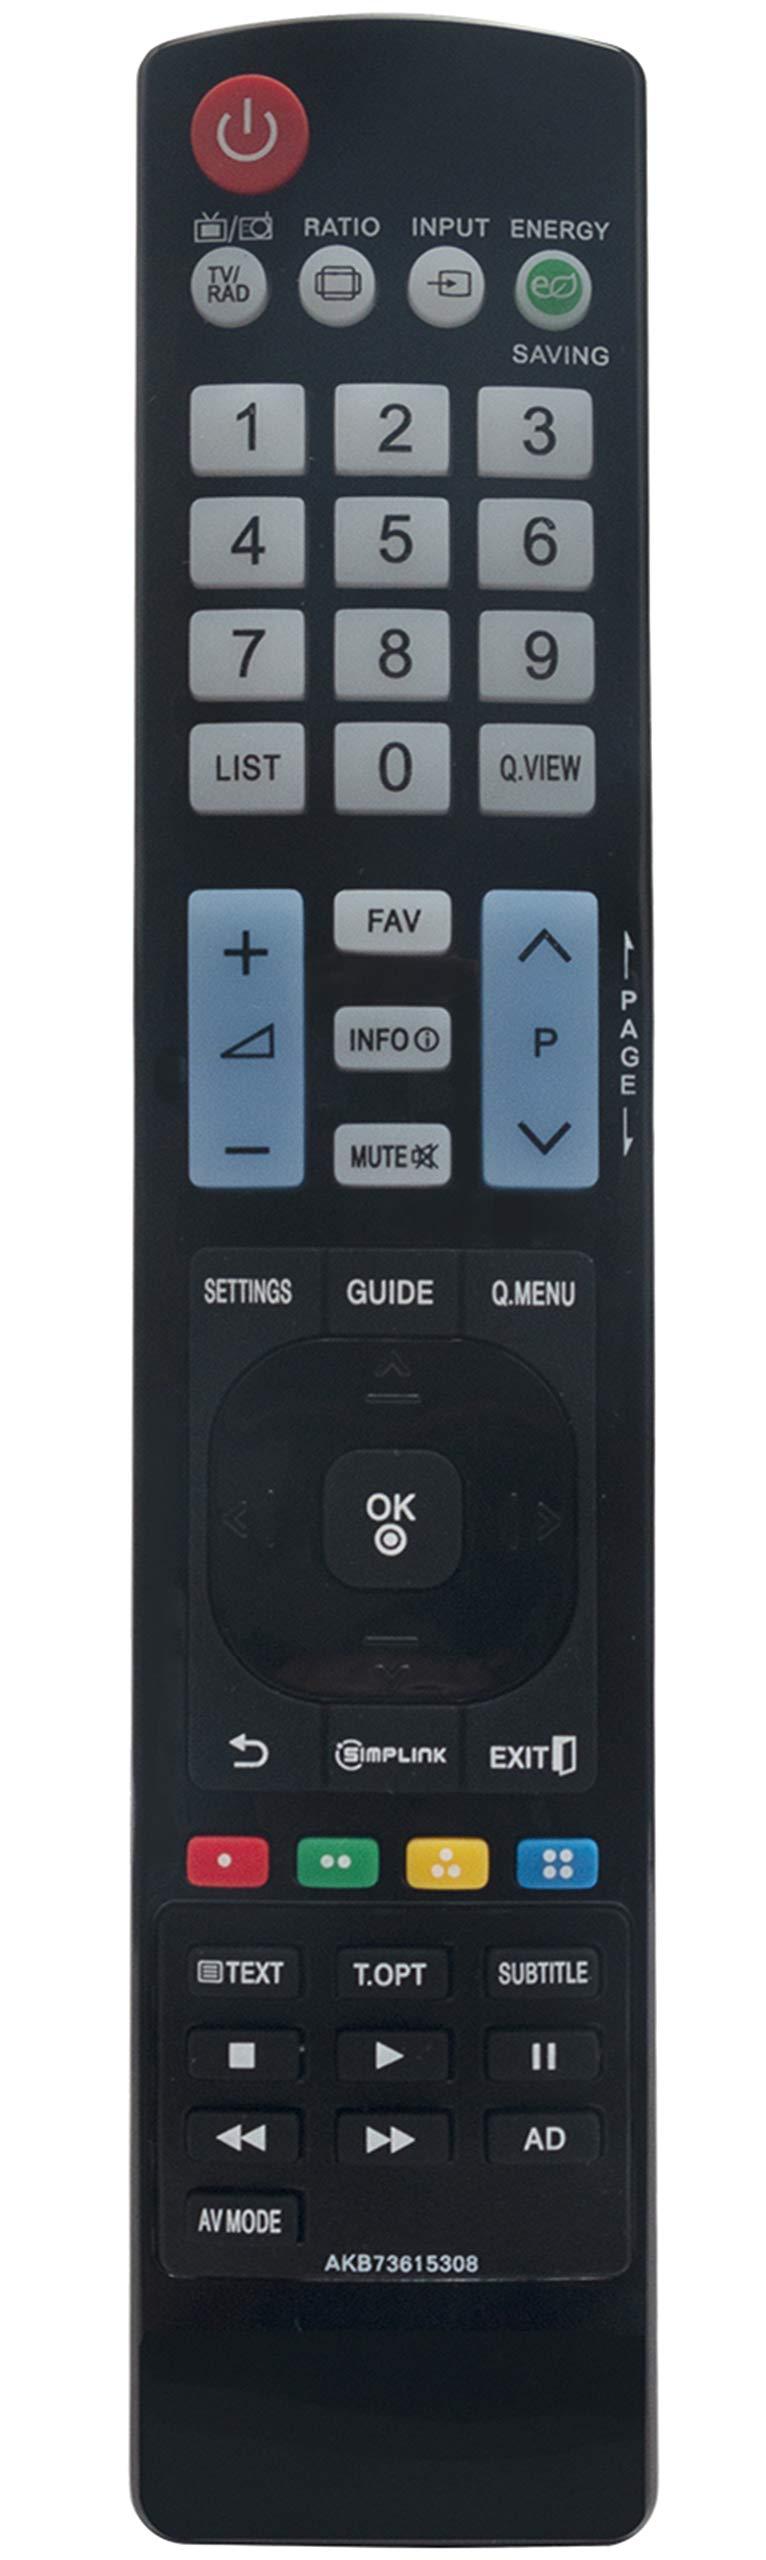 AKB73615308 Replaced Remote fit for LG TV 42PA4500-TM 42PA4520-TJ 42PA4530-TH 50PA4500-TF 50PA4520-TC 50PA4500-TM 50PA4520-TJ 42PA4900-TE 50PA4530-TH 50PA4900-TE 50PA6500-TF 50PA4900-TL 42PA4900-TL